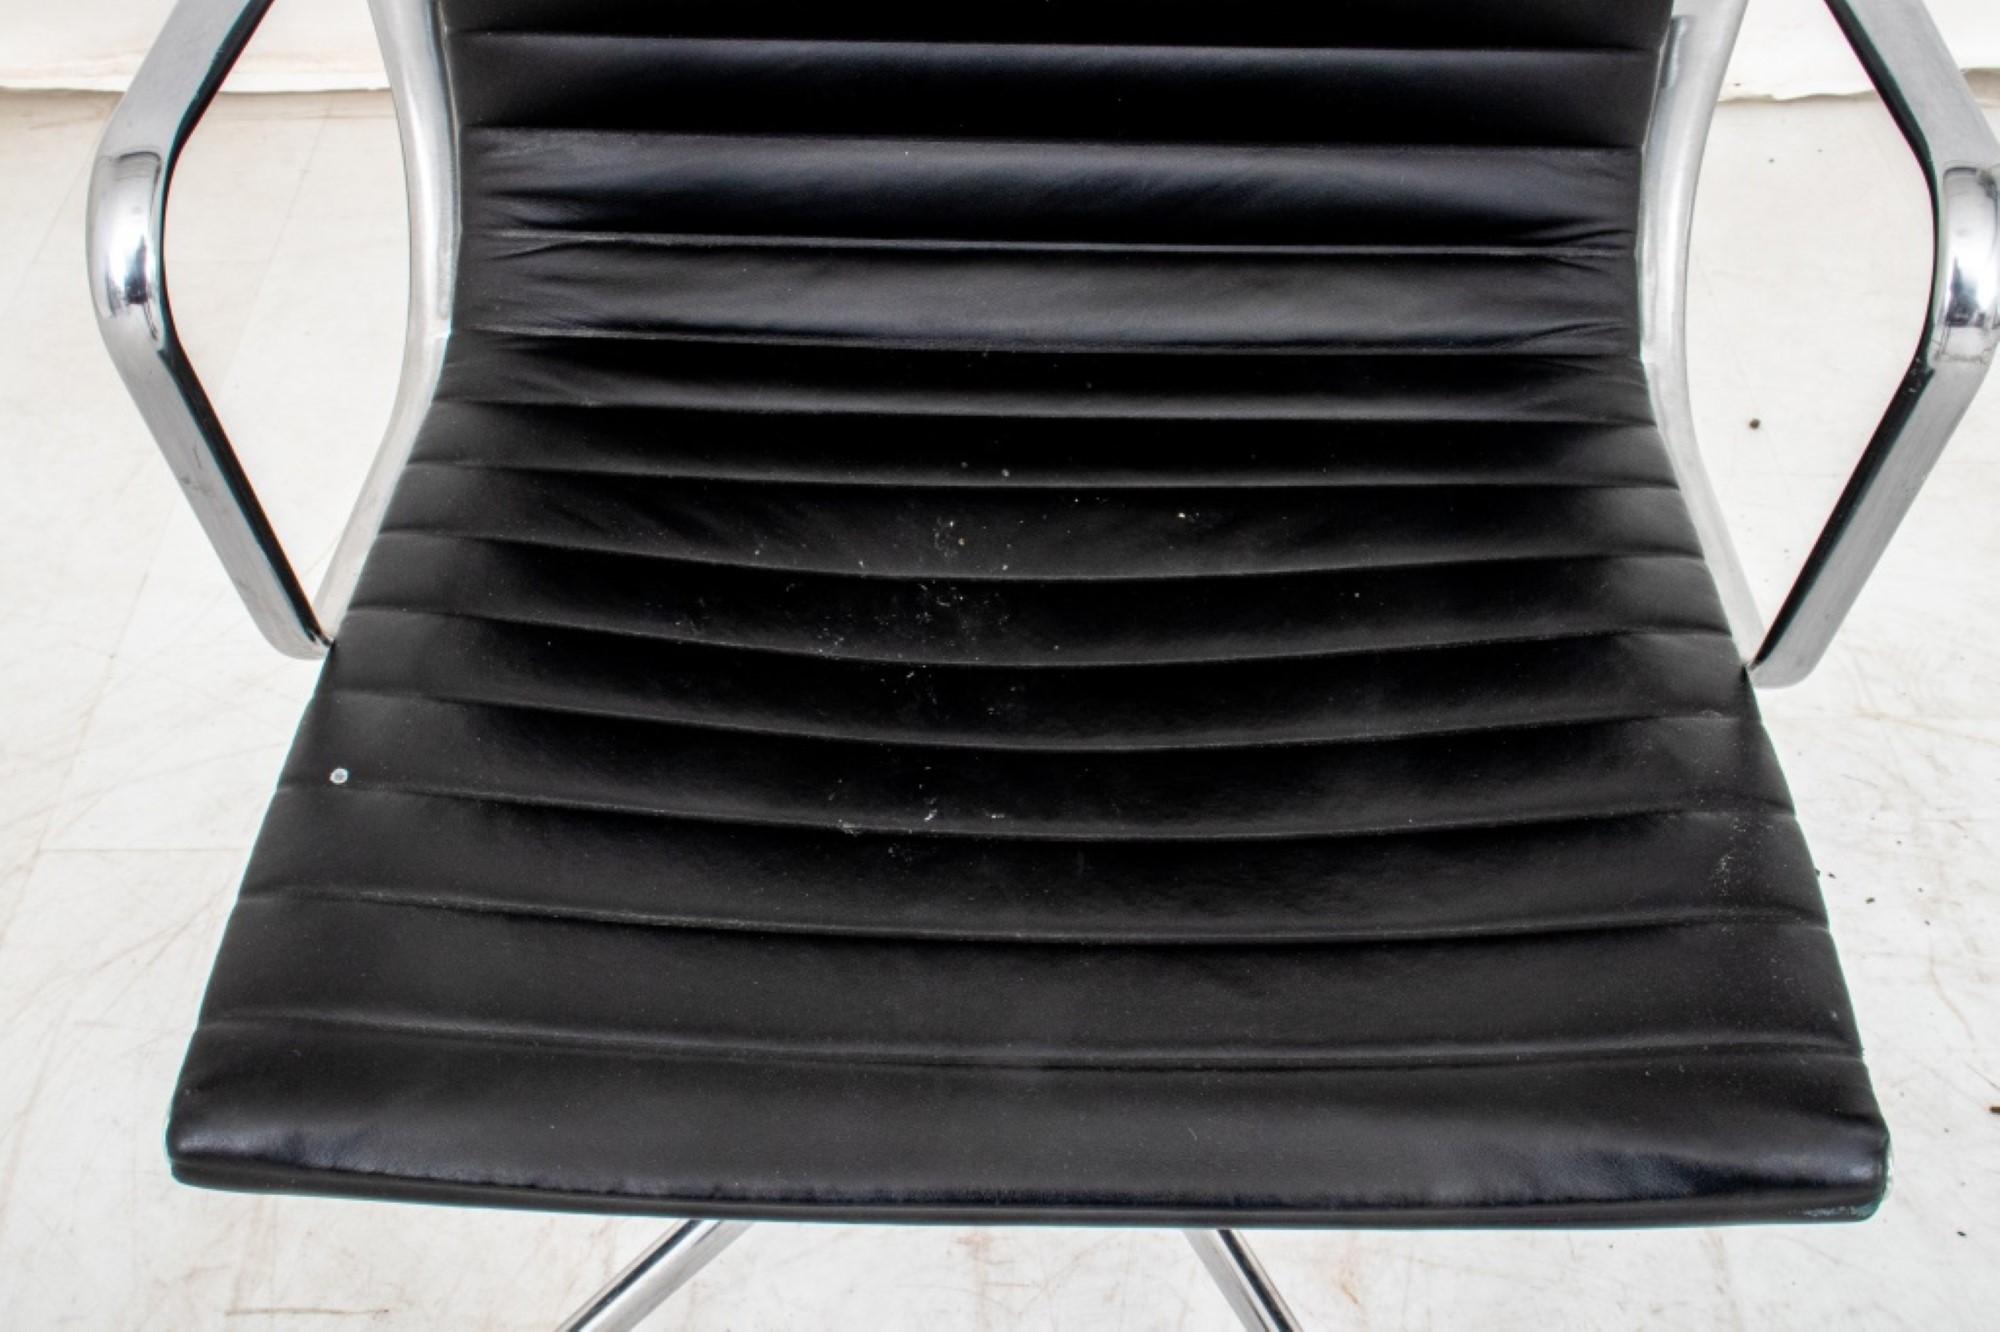 Eames Herman Miller Aluminum Group Desk Chair 1